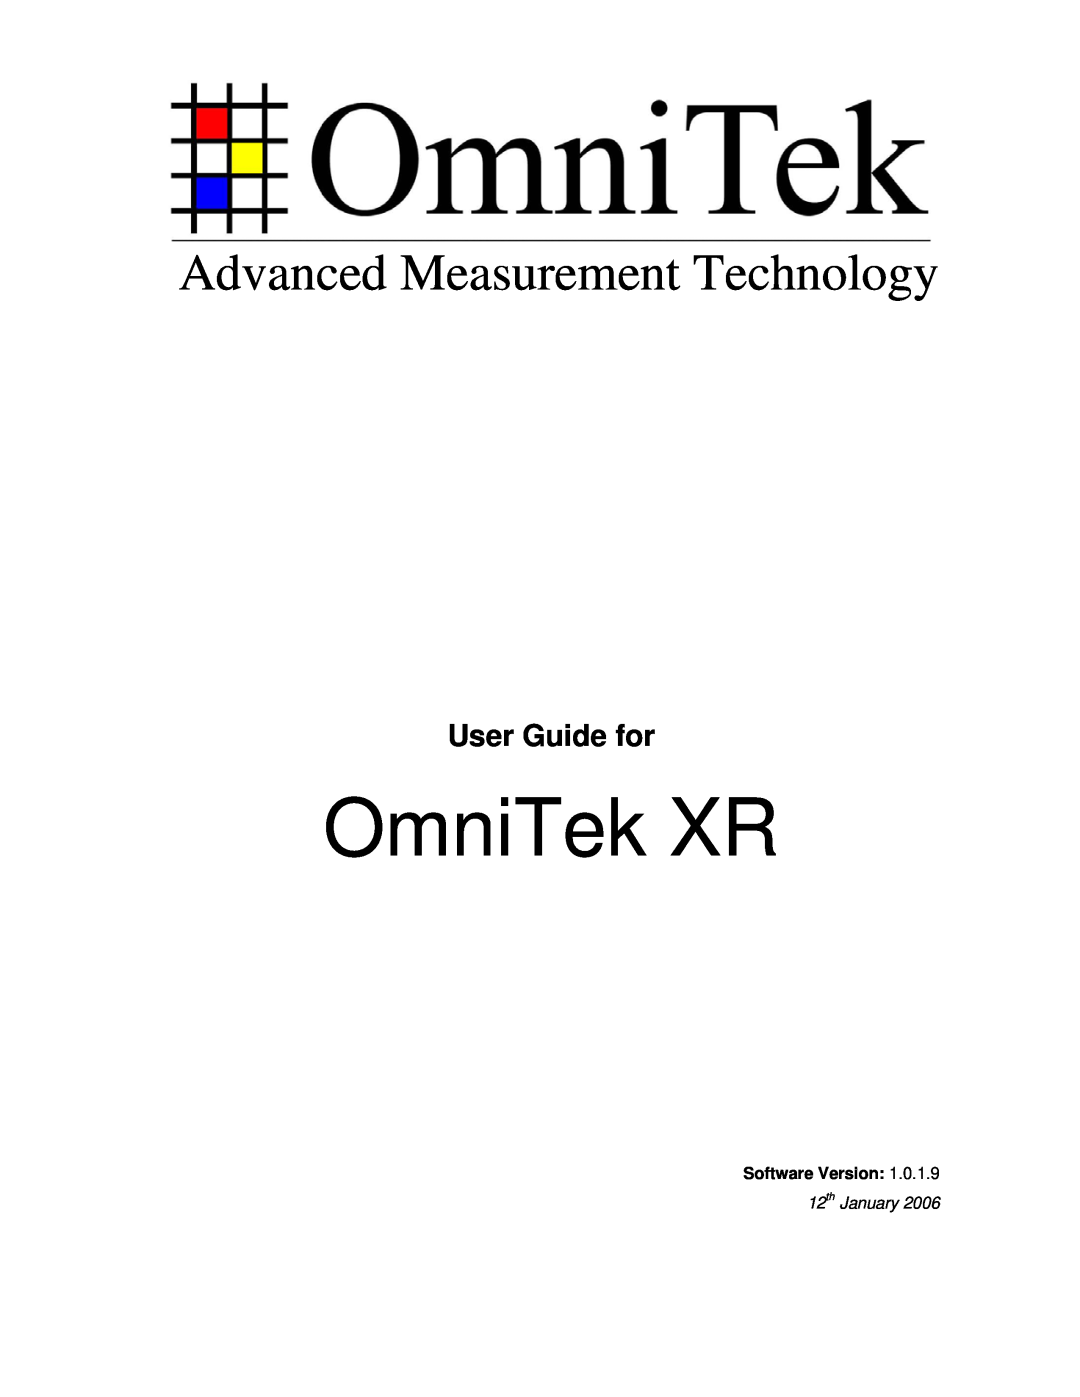 OmniTek OmniTek XR manual Software Version, Advanced Measurement Technology, User Guide for, 12th January 